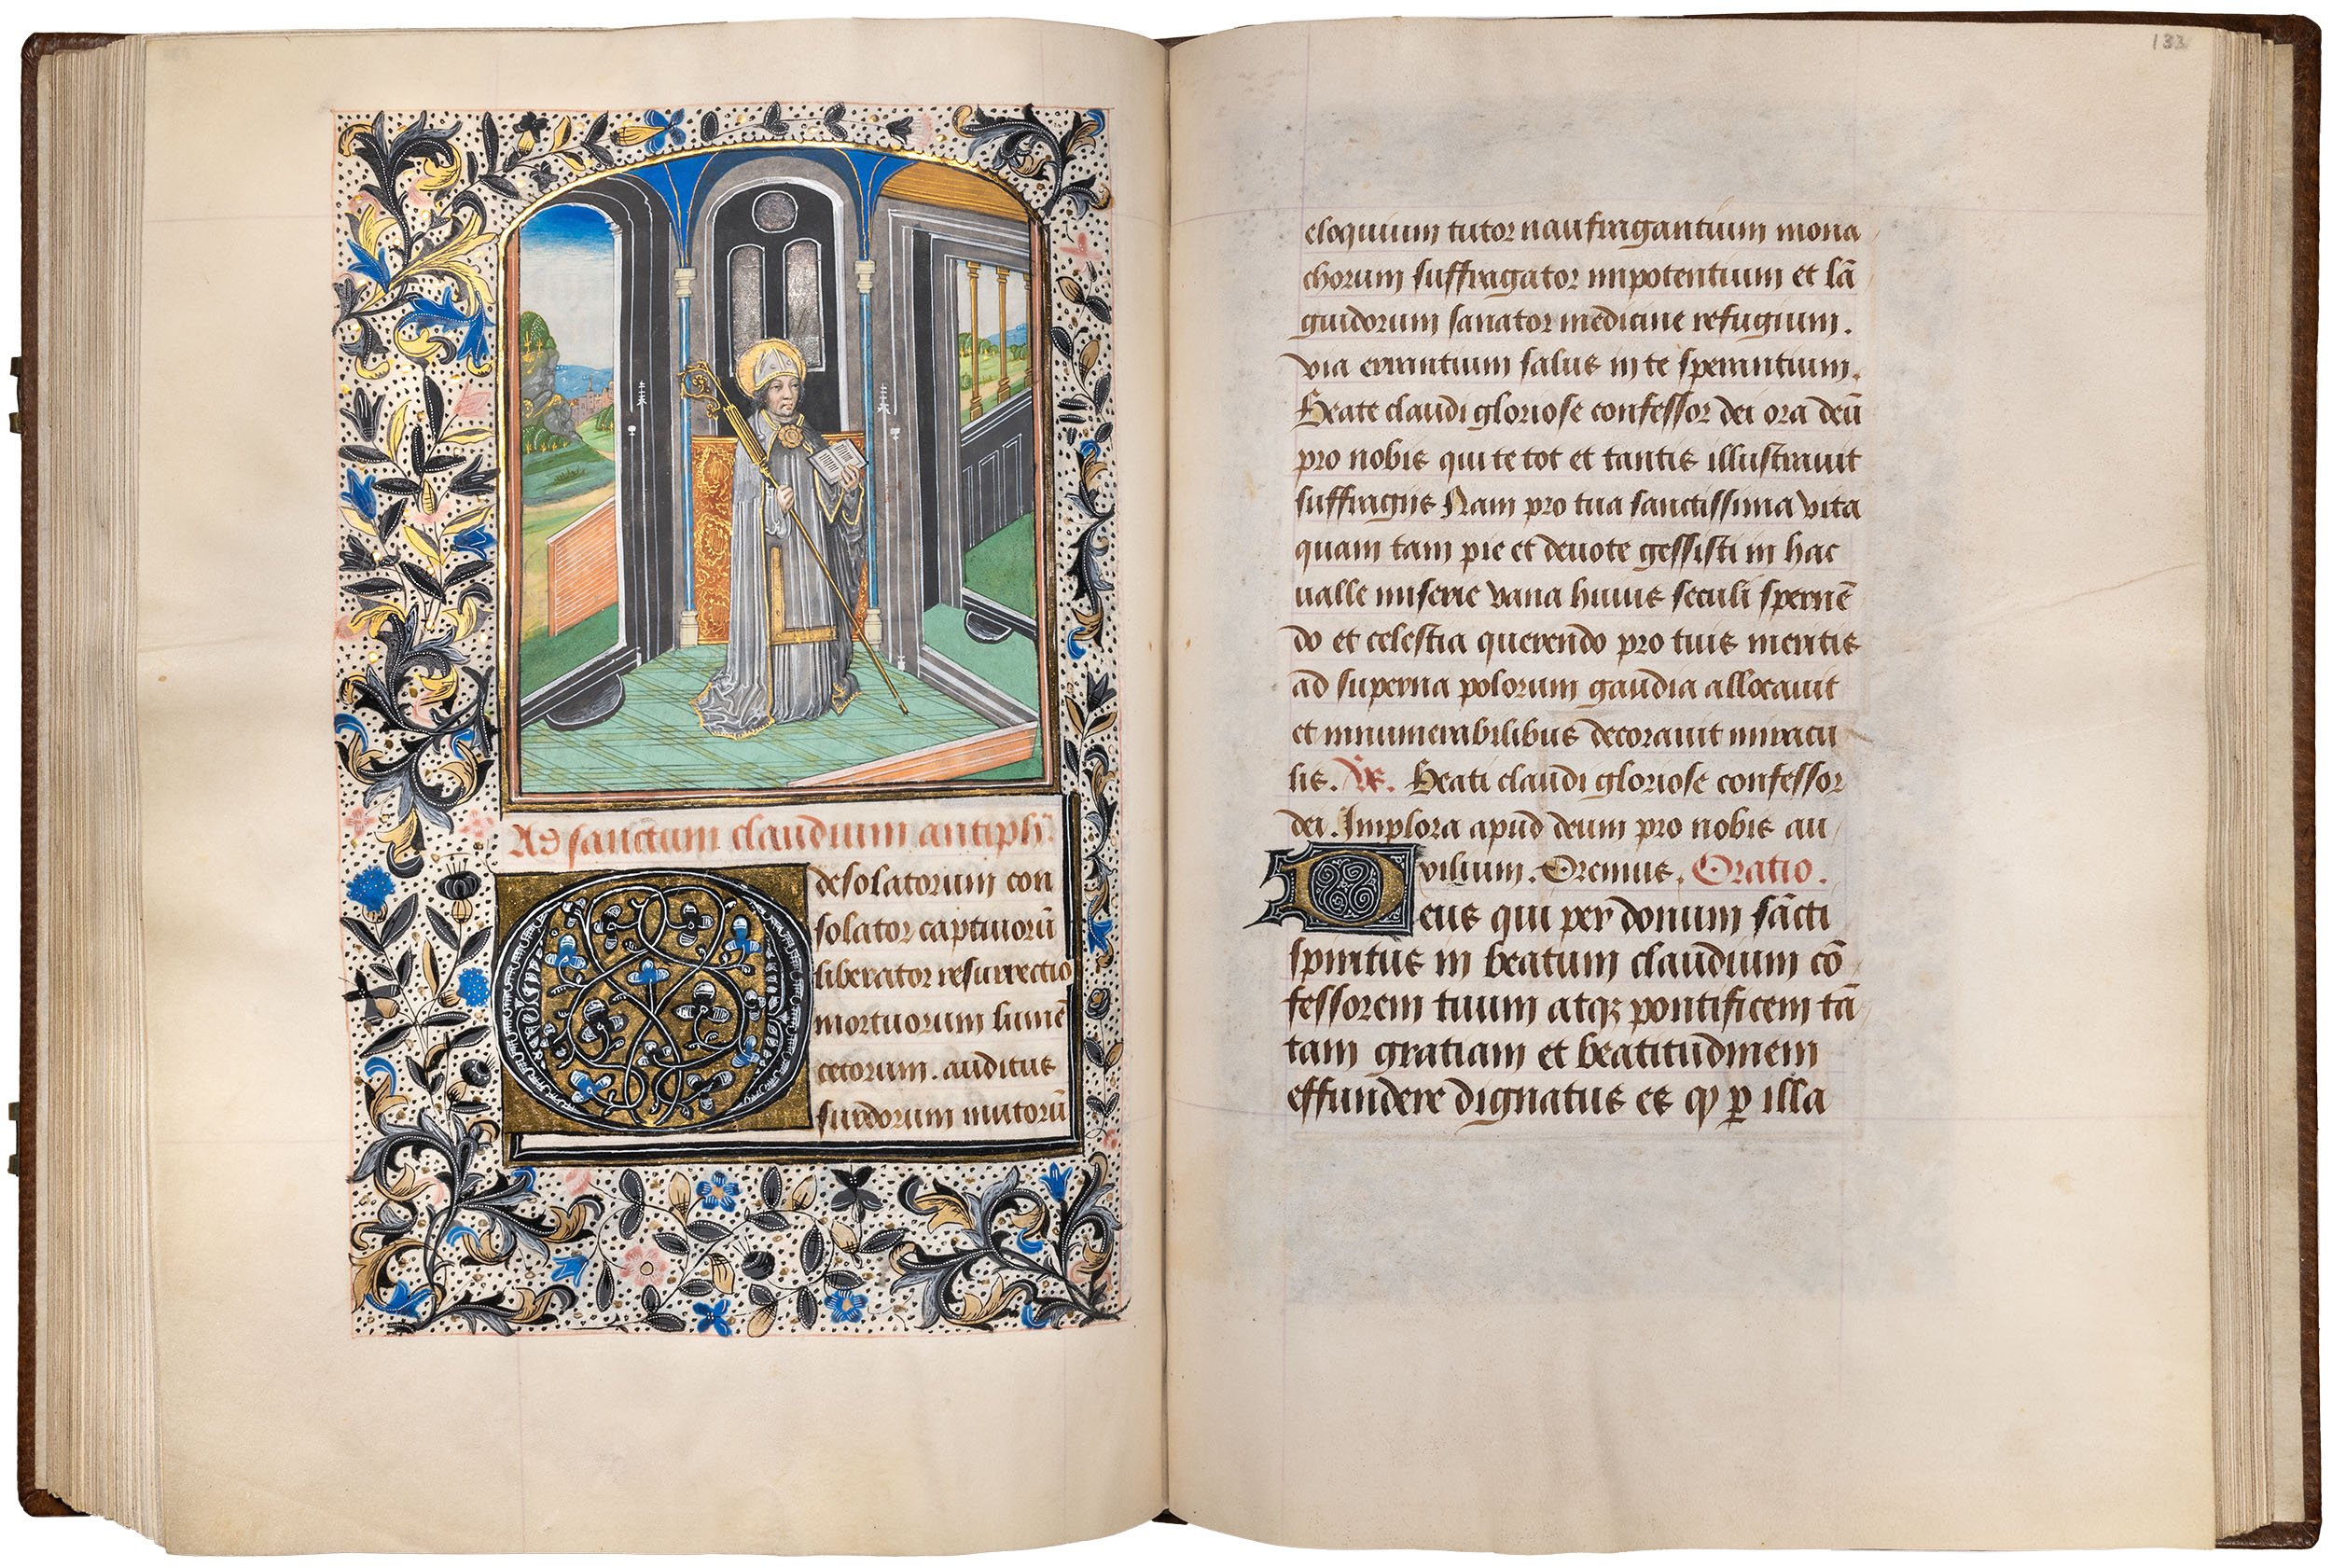 Book-of-hours-claude-toulongeon-grisaille-order-golden-fleece-bruges-edward-iv-folio-36.jpg